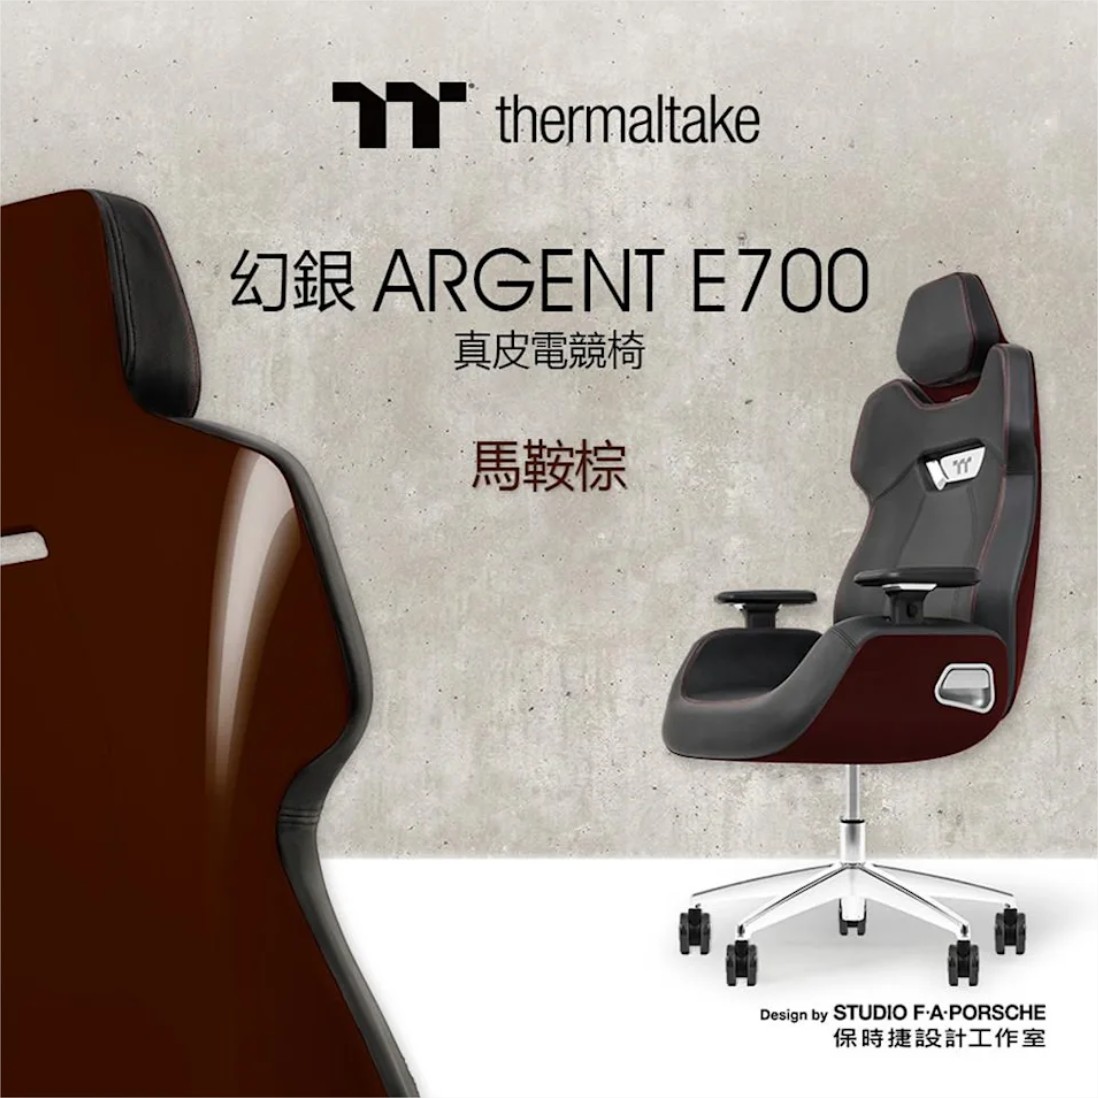 Thermaltake Argent E700 Marron